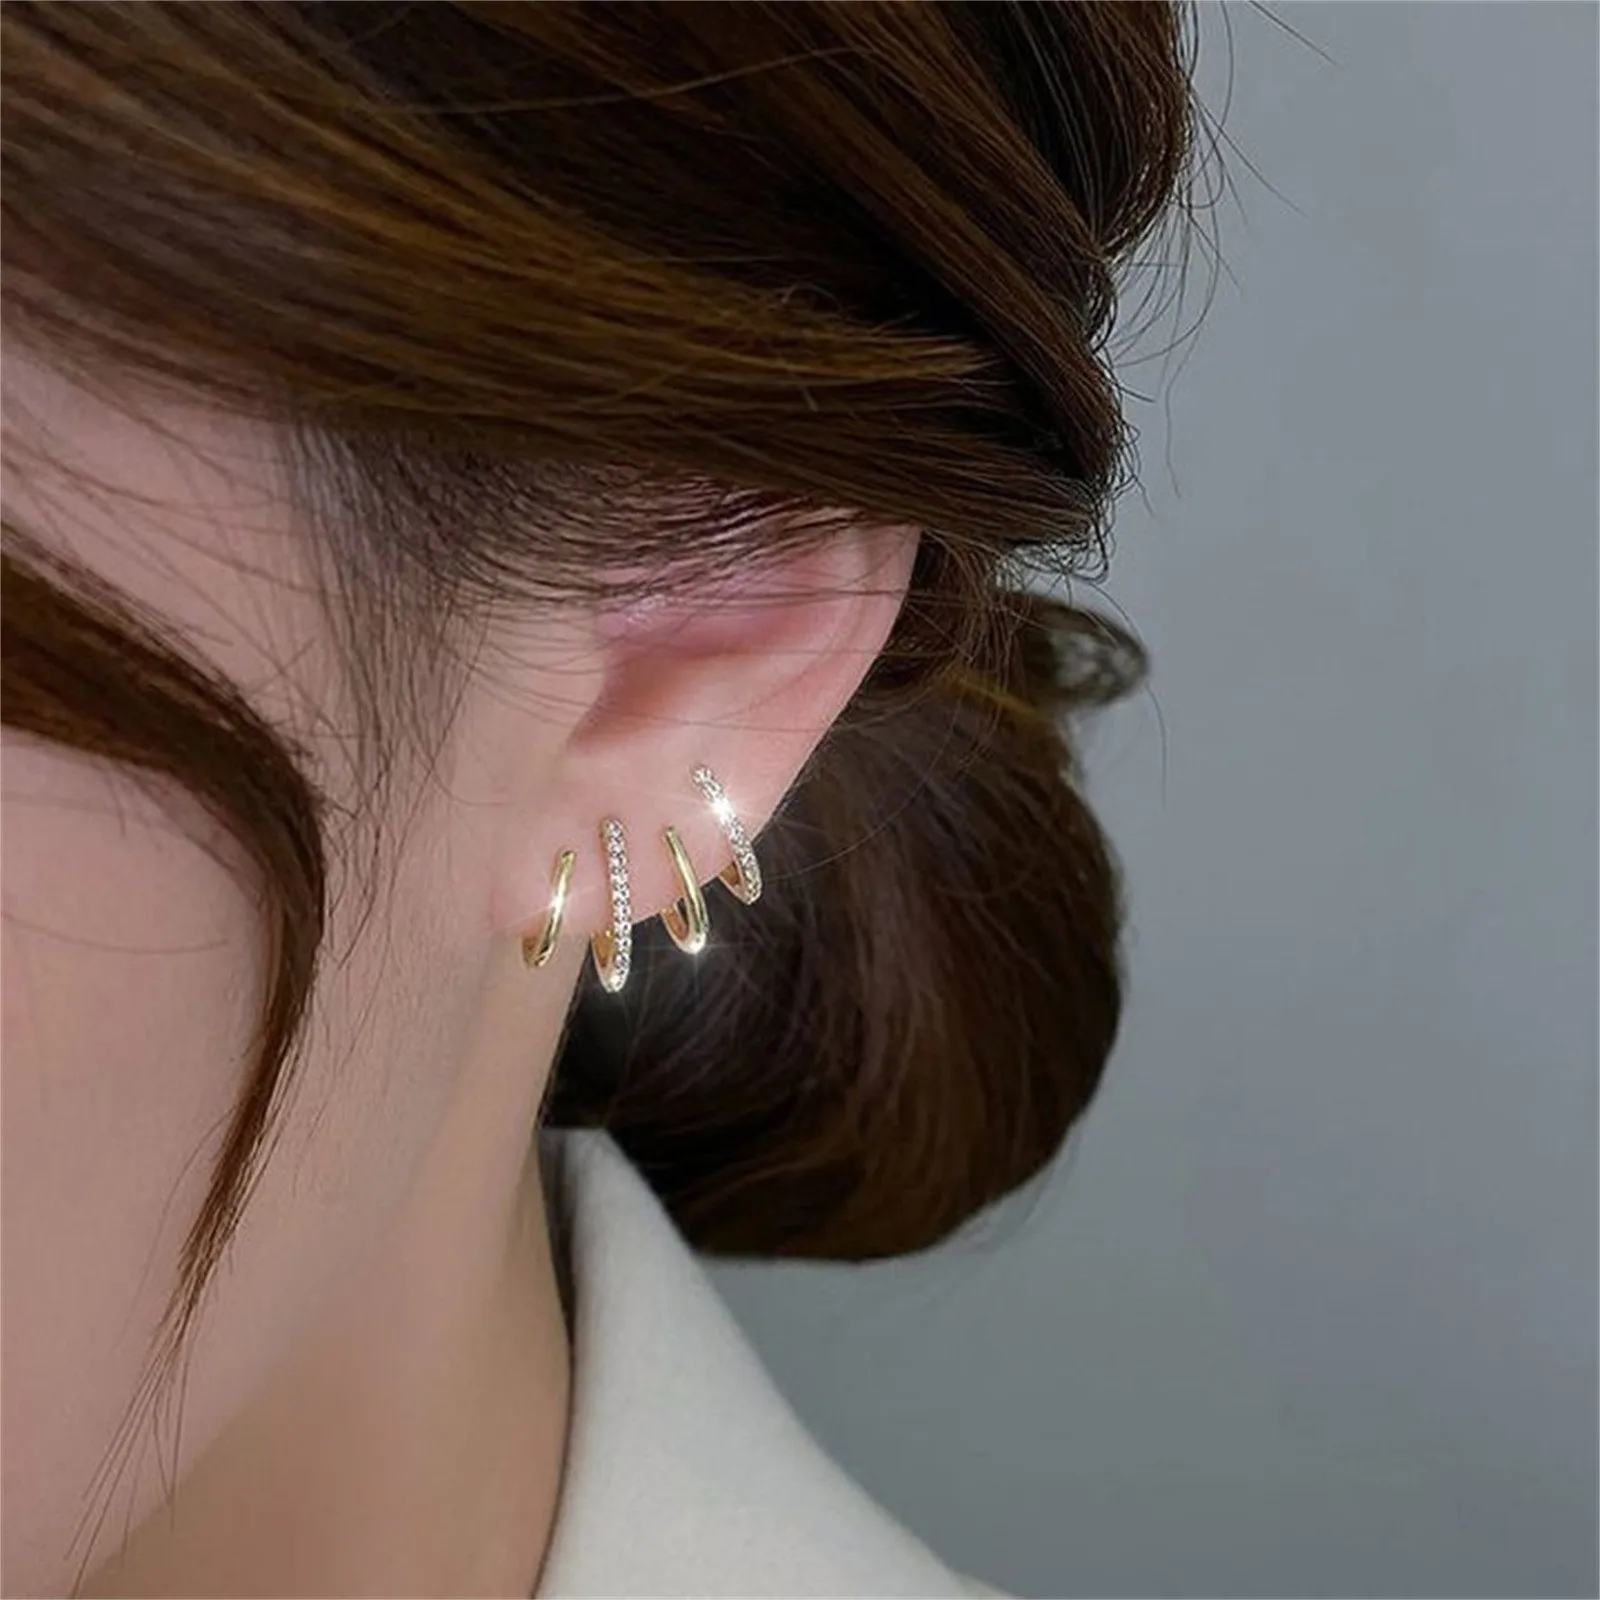 S925 Silver Needle Stud Earrings Niche Temperament Earrings Trendy Light Luxury Fashion Female Retro Exquisite Earrings Jewelry Gifts for Mom Wife Girlfriend 